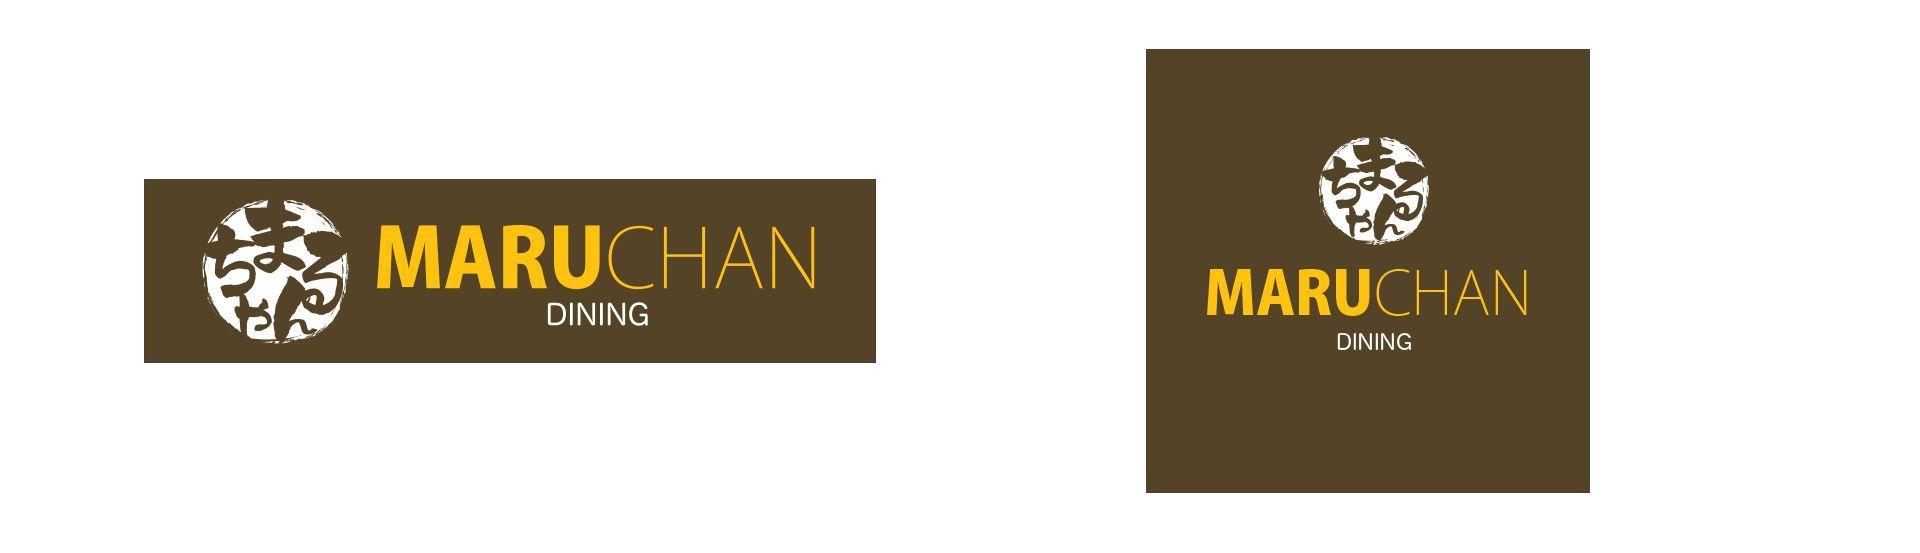 Maruchan Logo - Flax Inc | Maruchan - LOGO CI VI